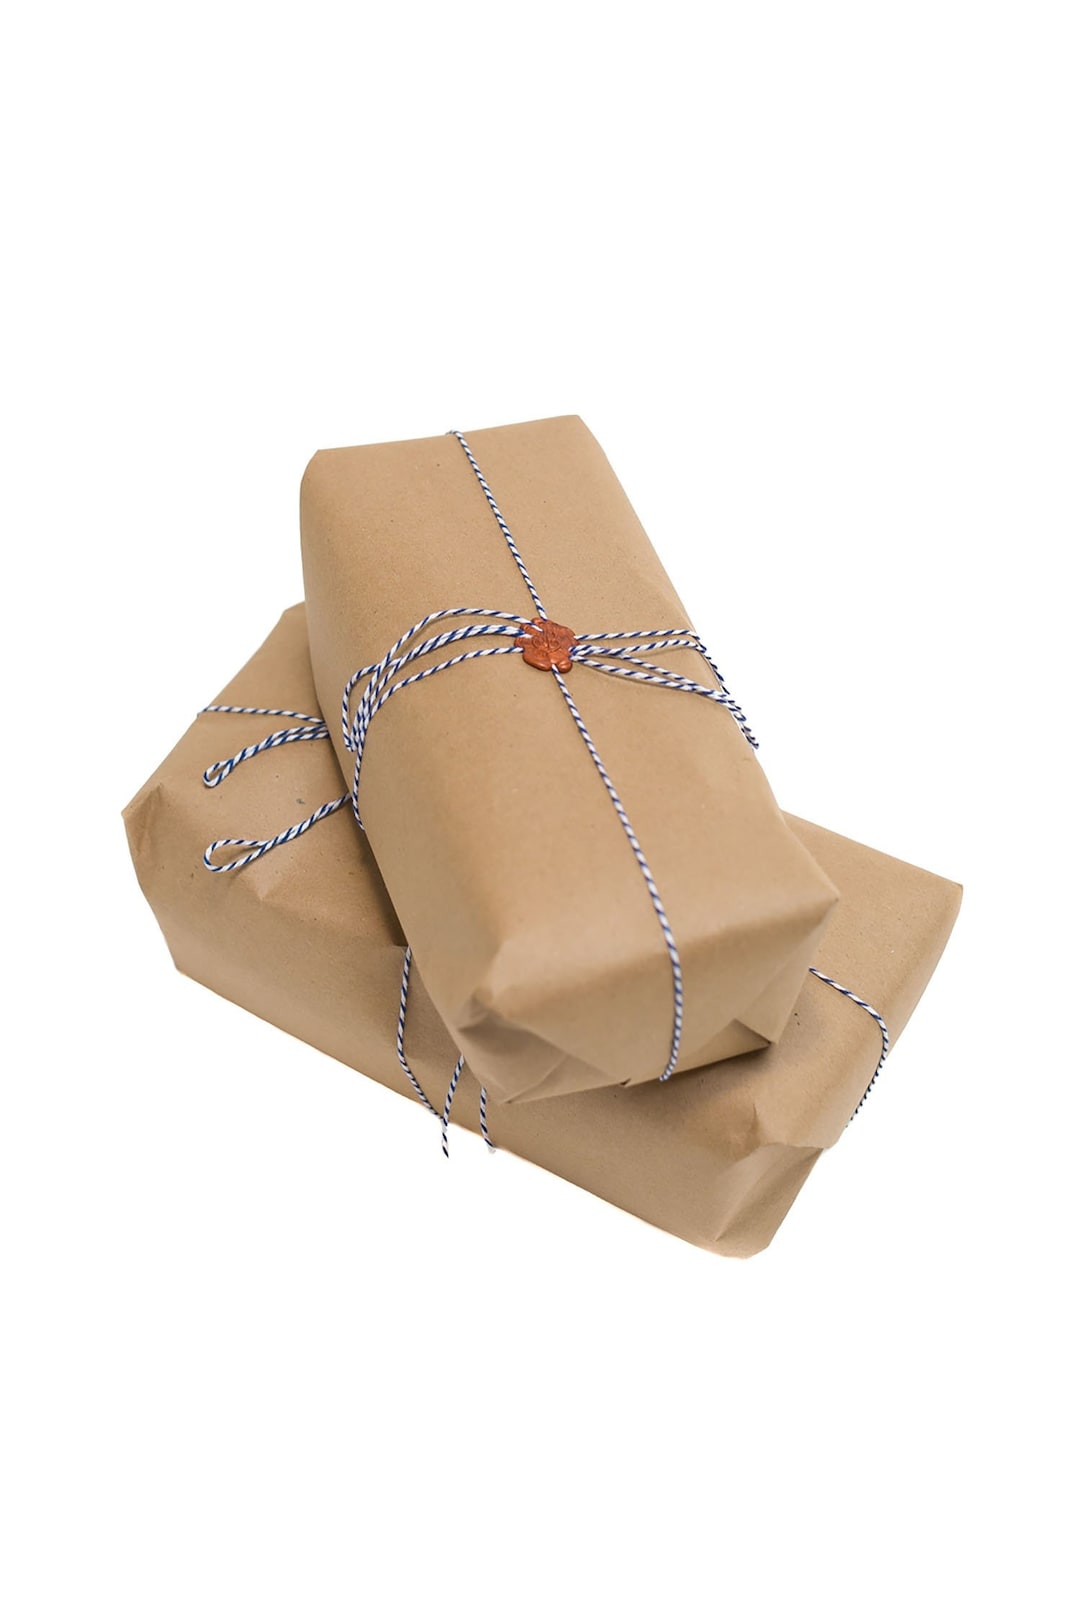 Gogogmee 1 Roll Gift Box Kraft Paper Brown Paper Gift Wrapping Paper Brown  Shipping Paper Damping Paper Postal Paper Brown Kraft Paper Wrapping Paper